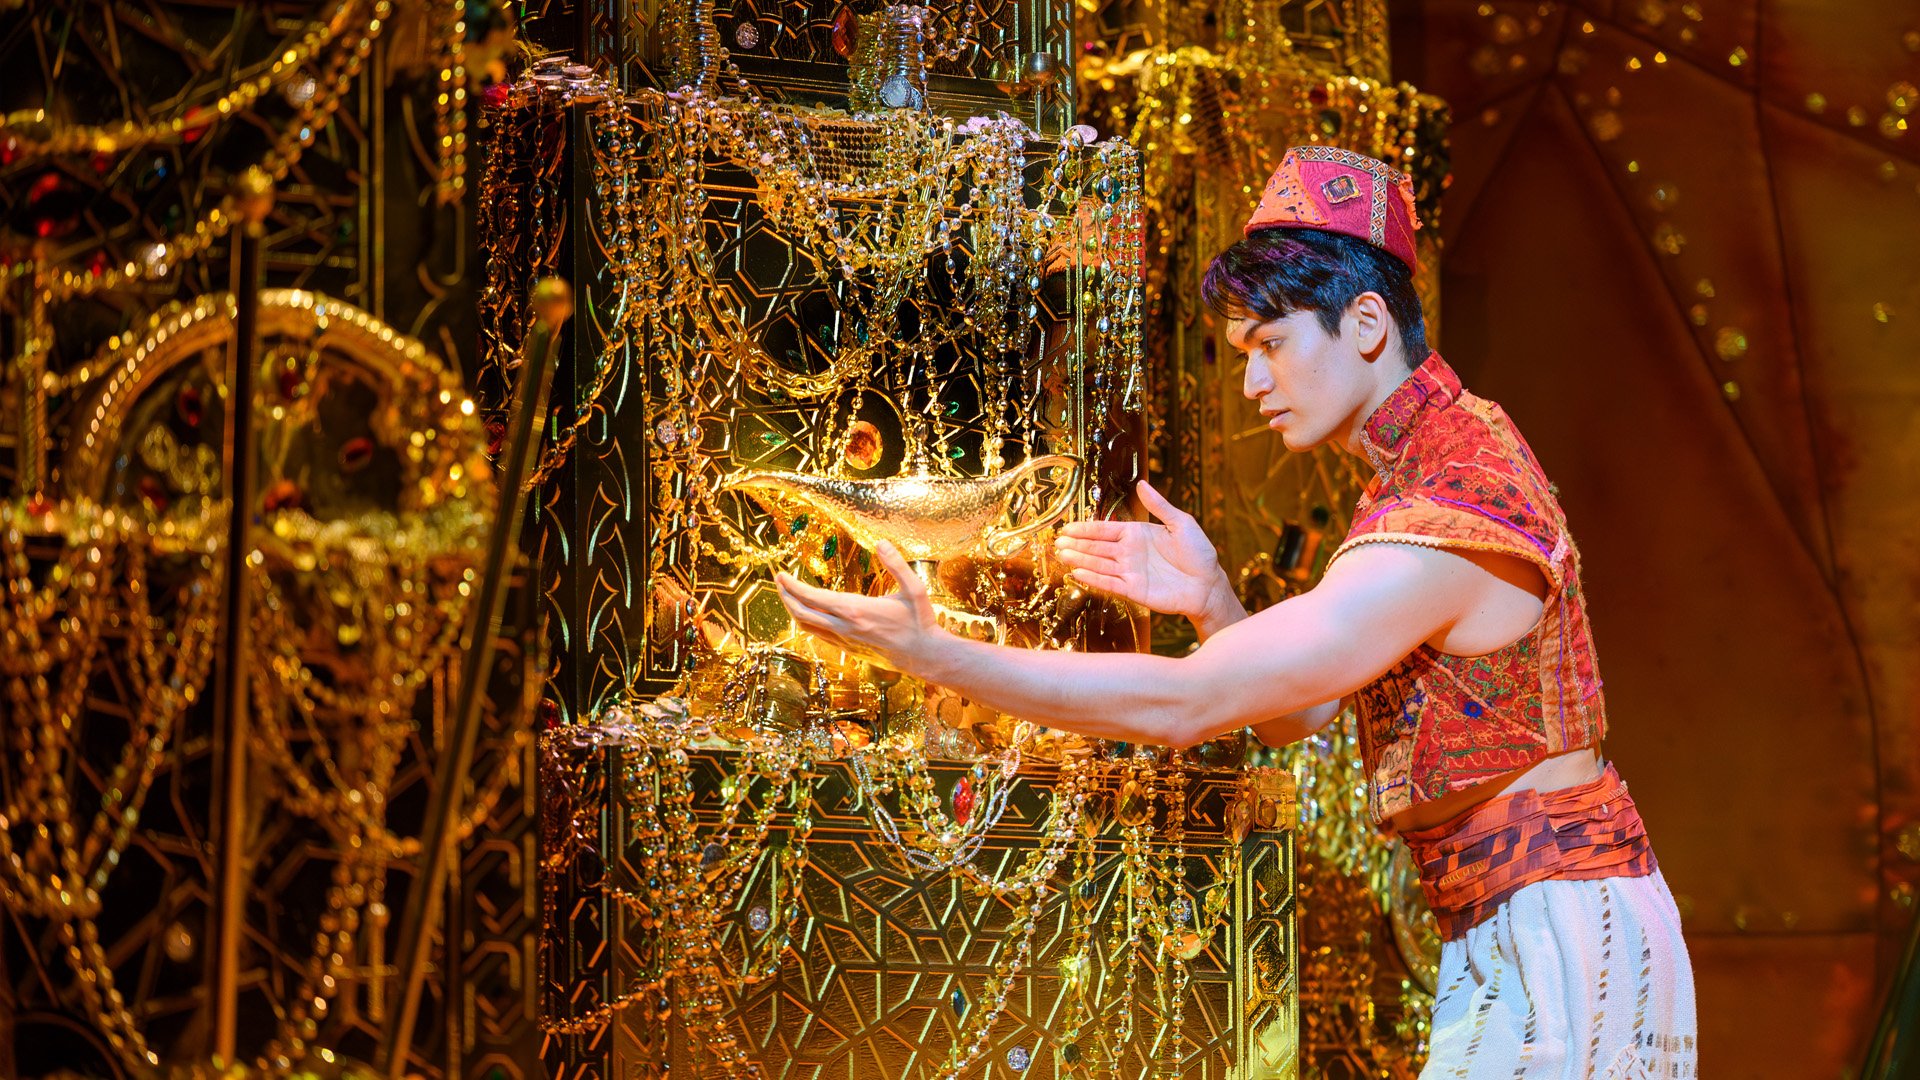 Milton Keynes Theatre welcomes Disney’s Aladdin